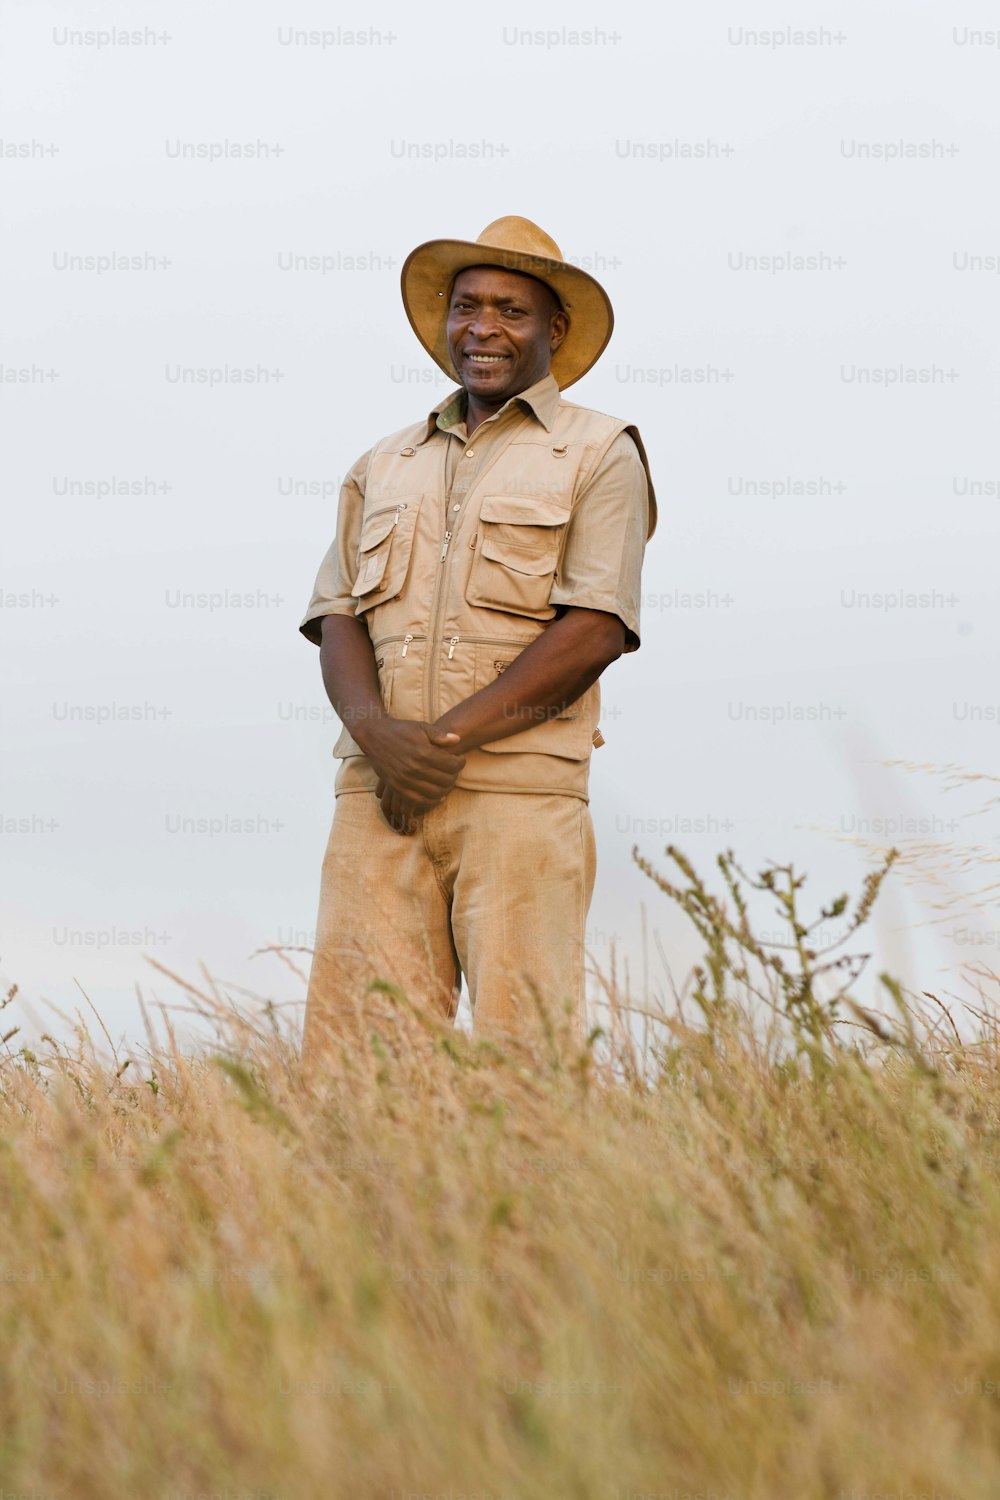 a man standing in a field wearing a hat